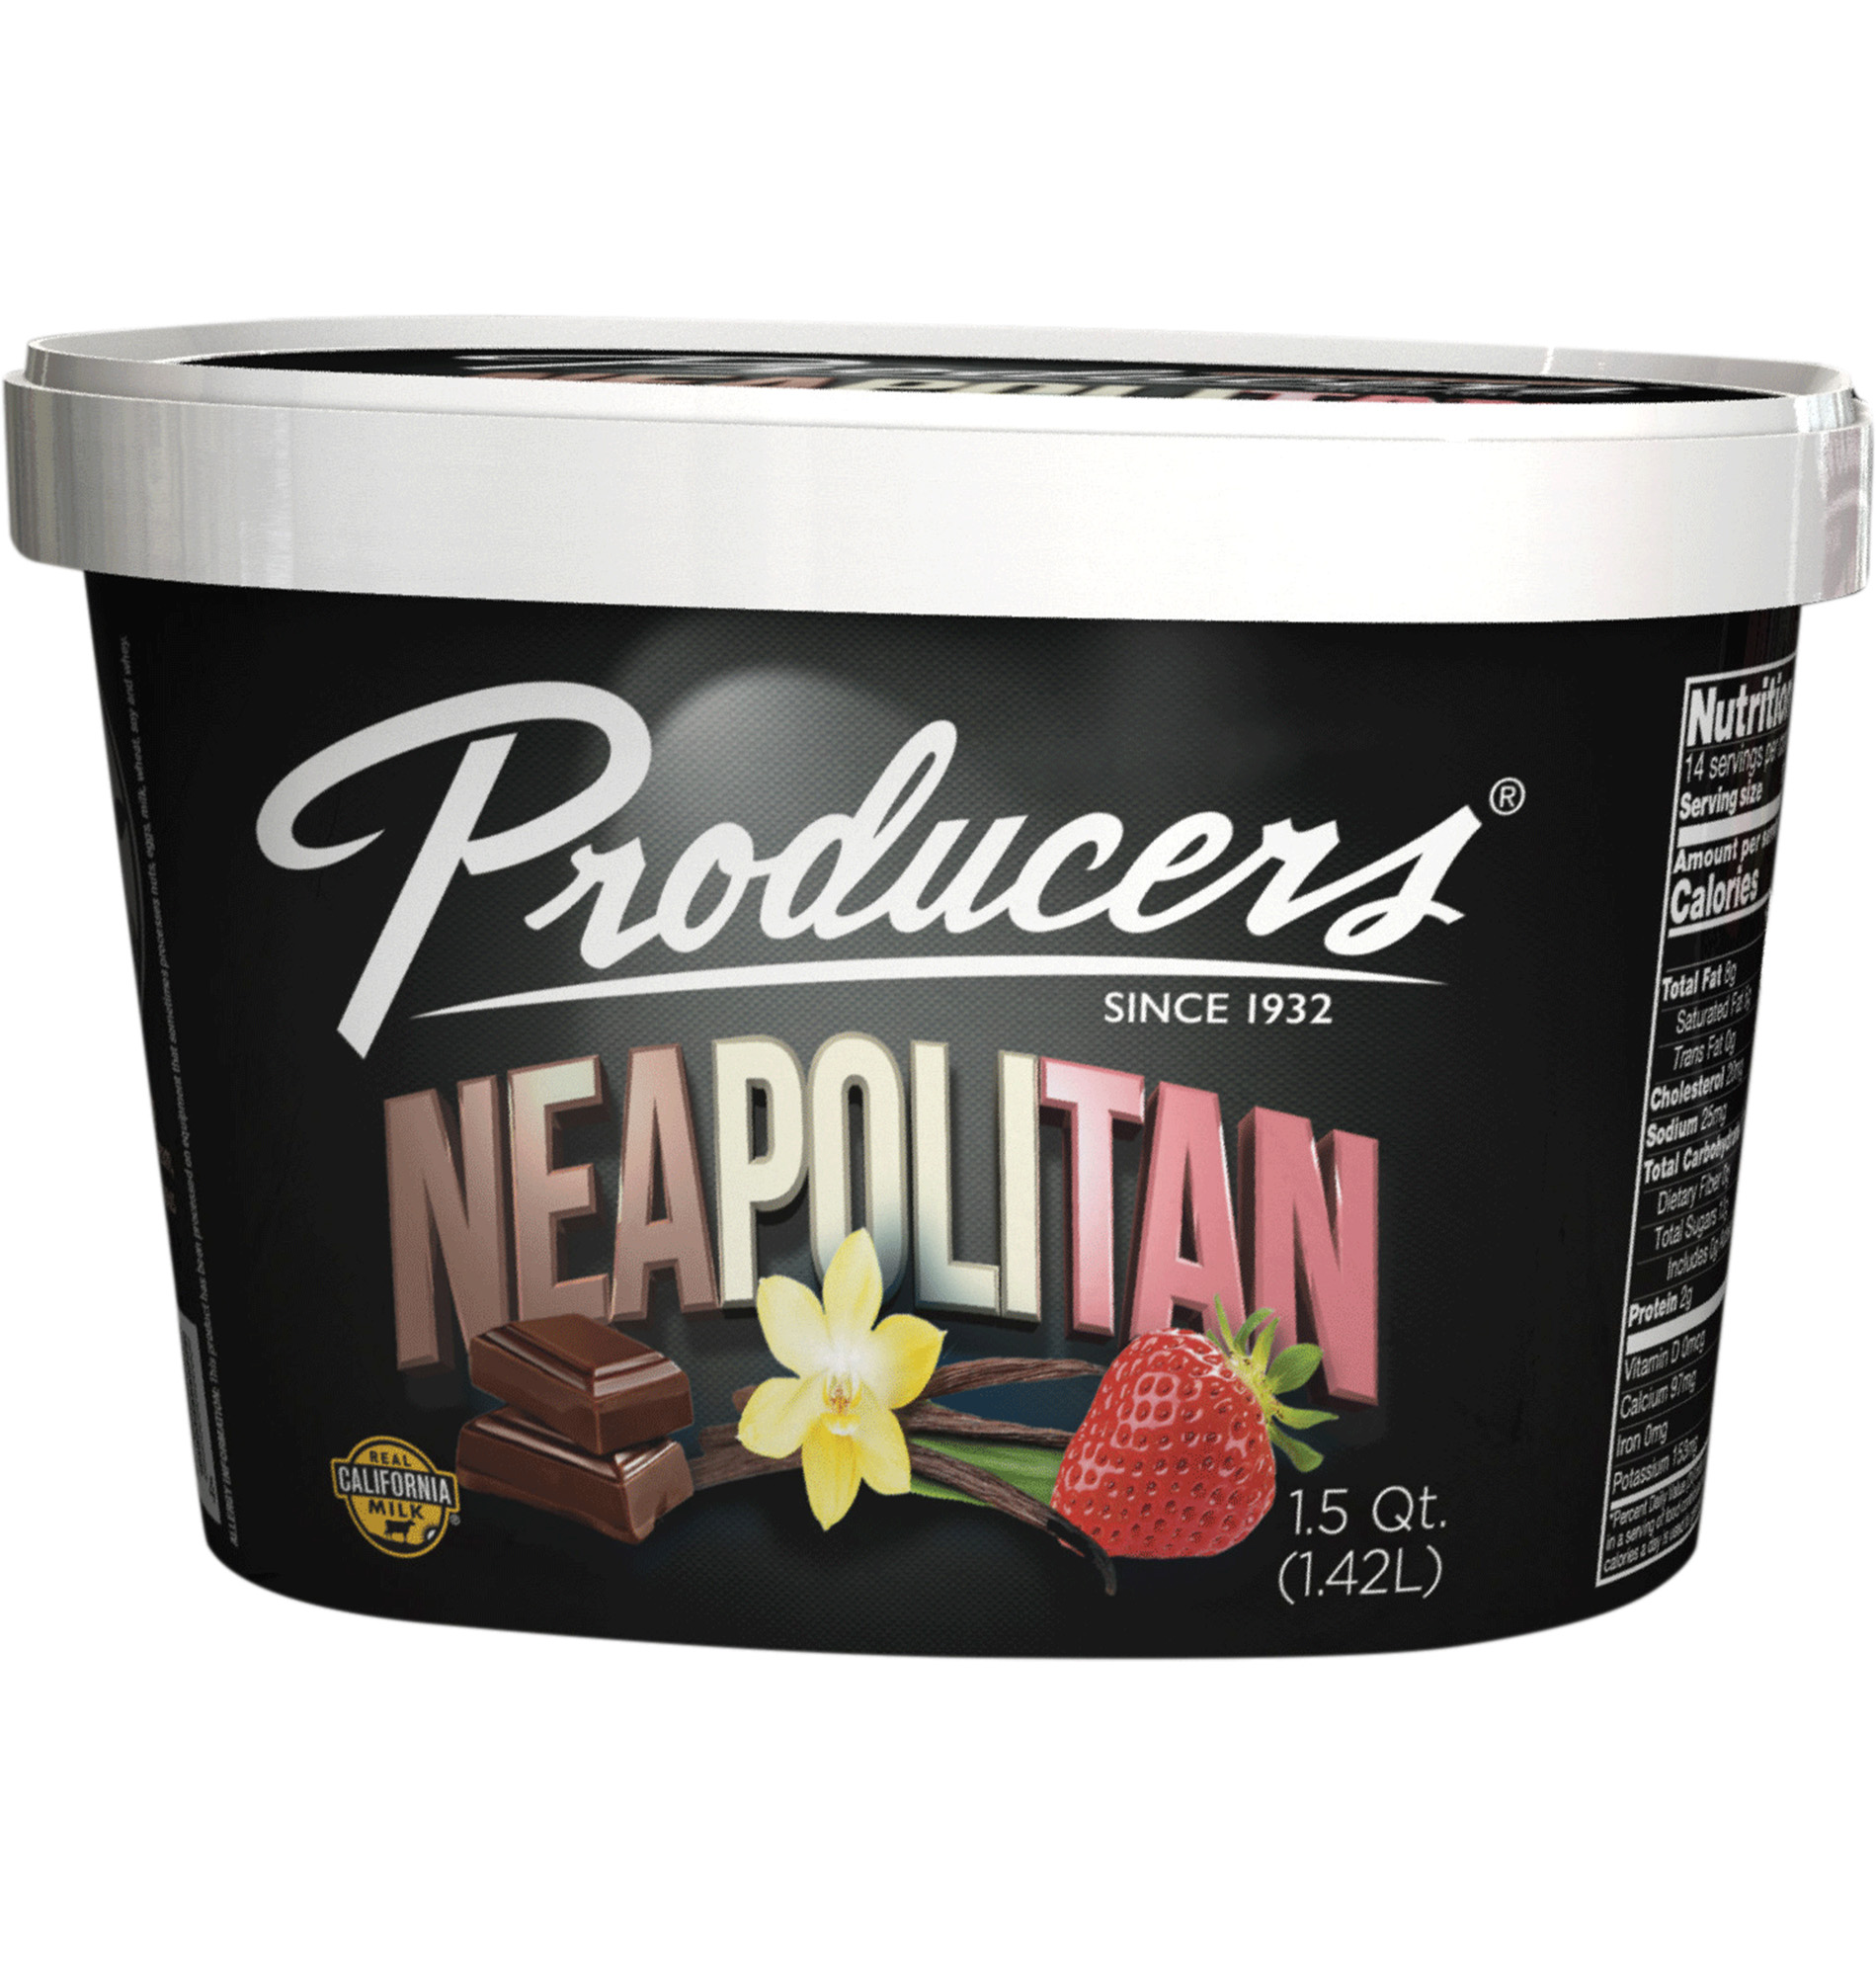 Neapolitan Producers Dairy Ice Cream Container